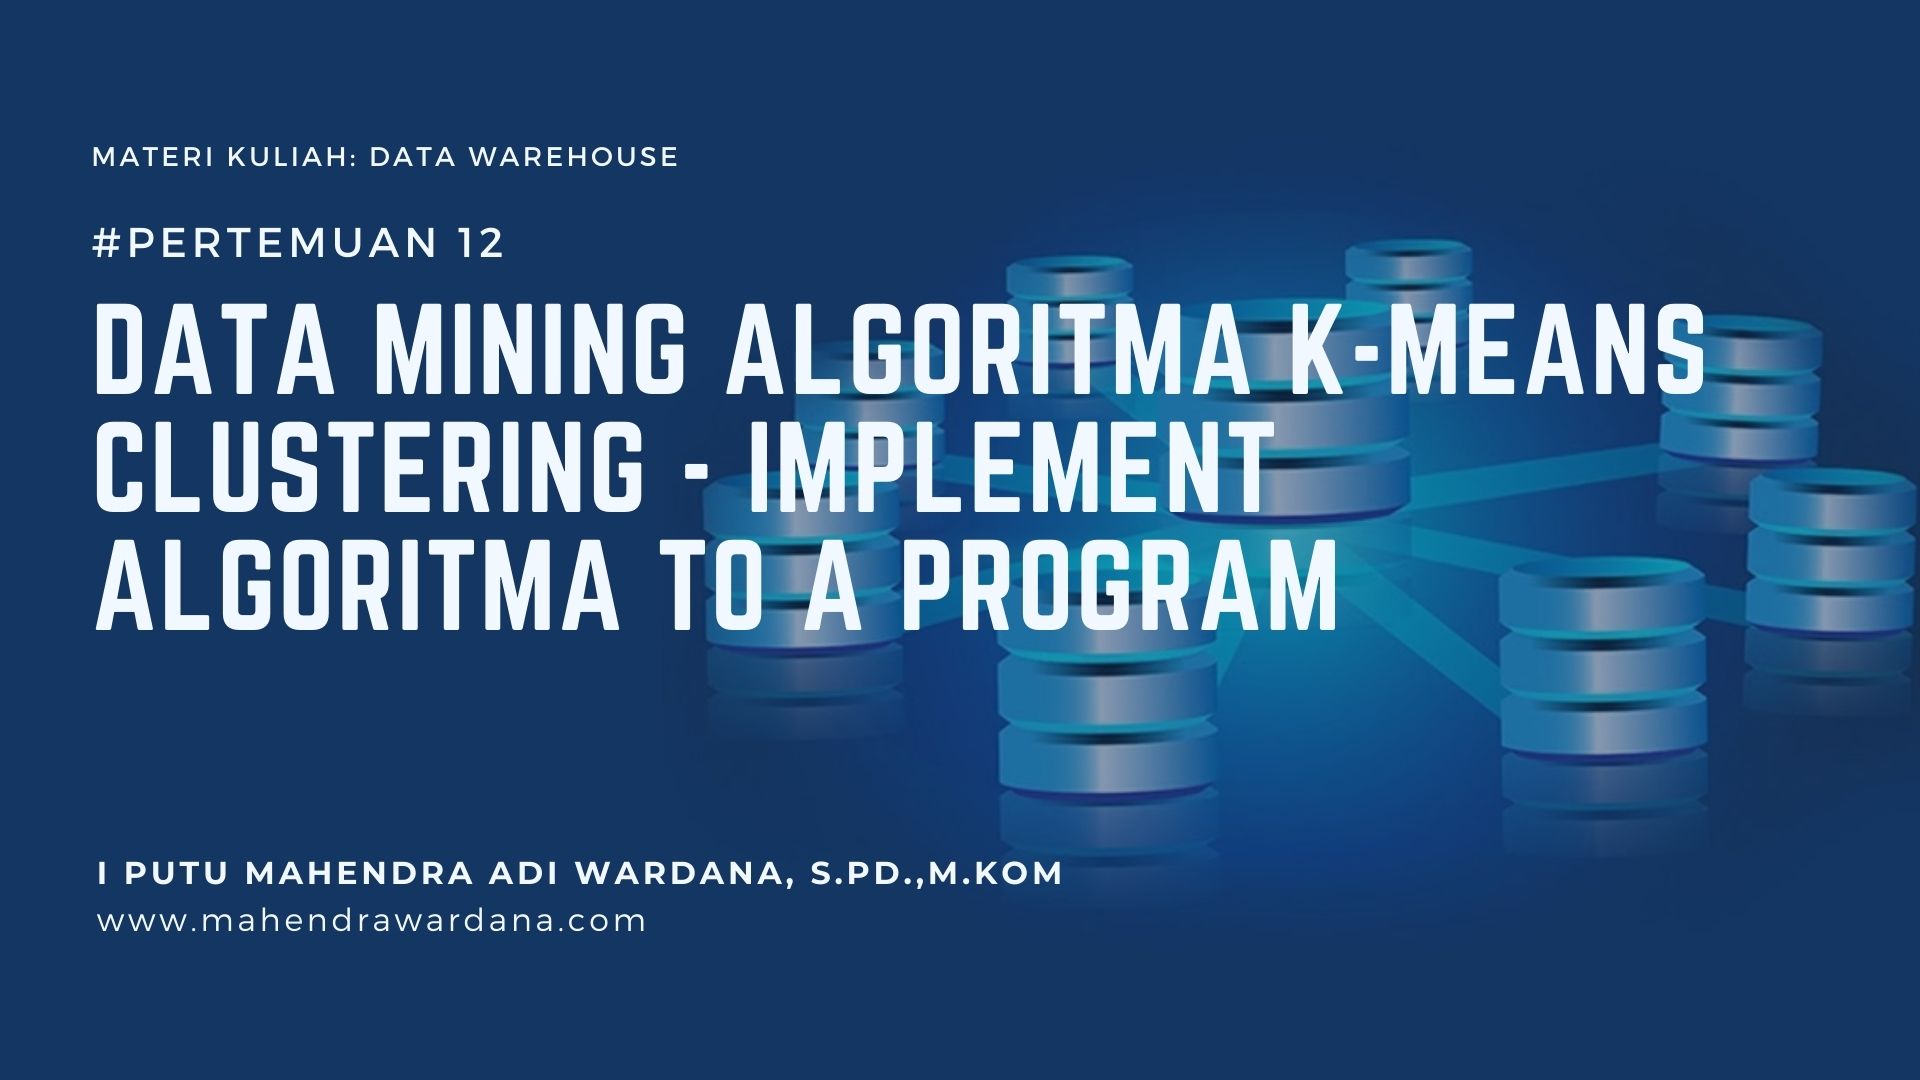 Pertemuan 12 - Data Mining Algoritma K-Means Clustering - Implement Algoritma to a Program